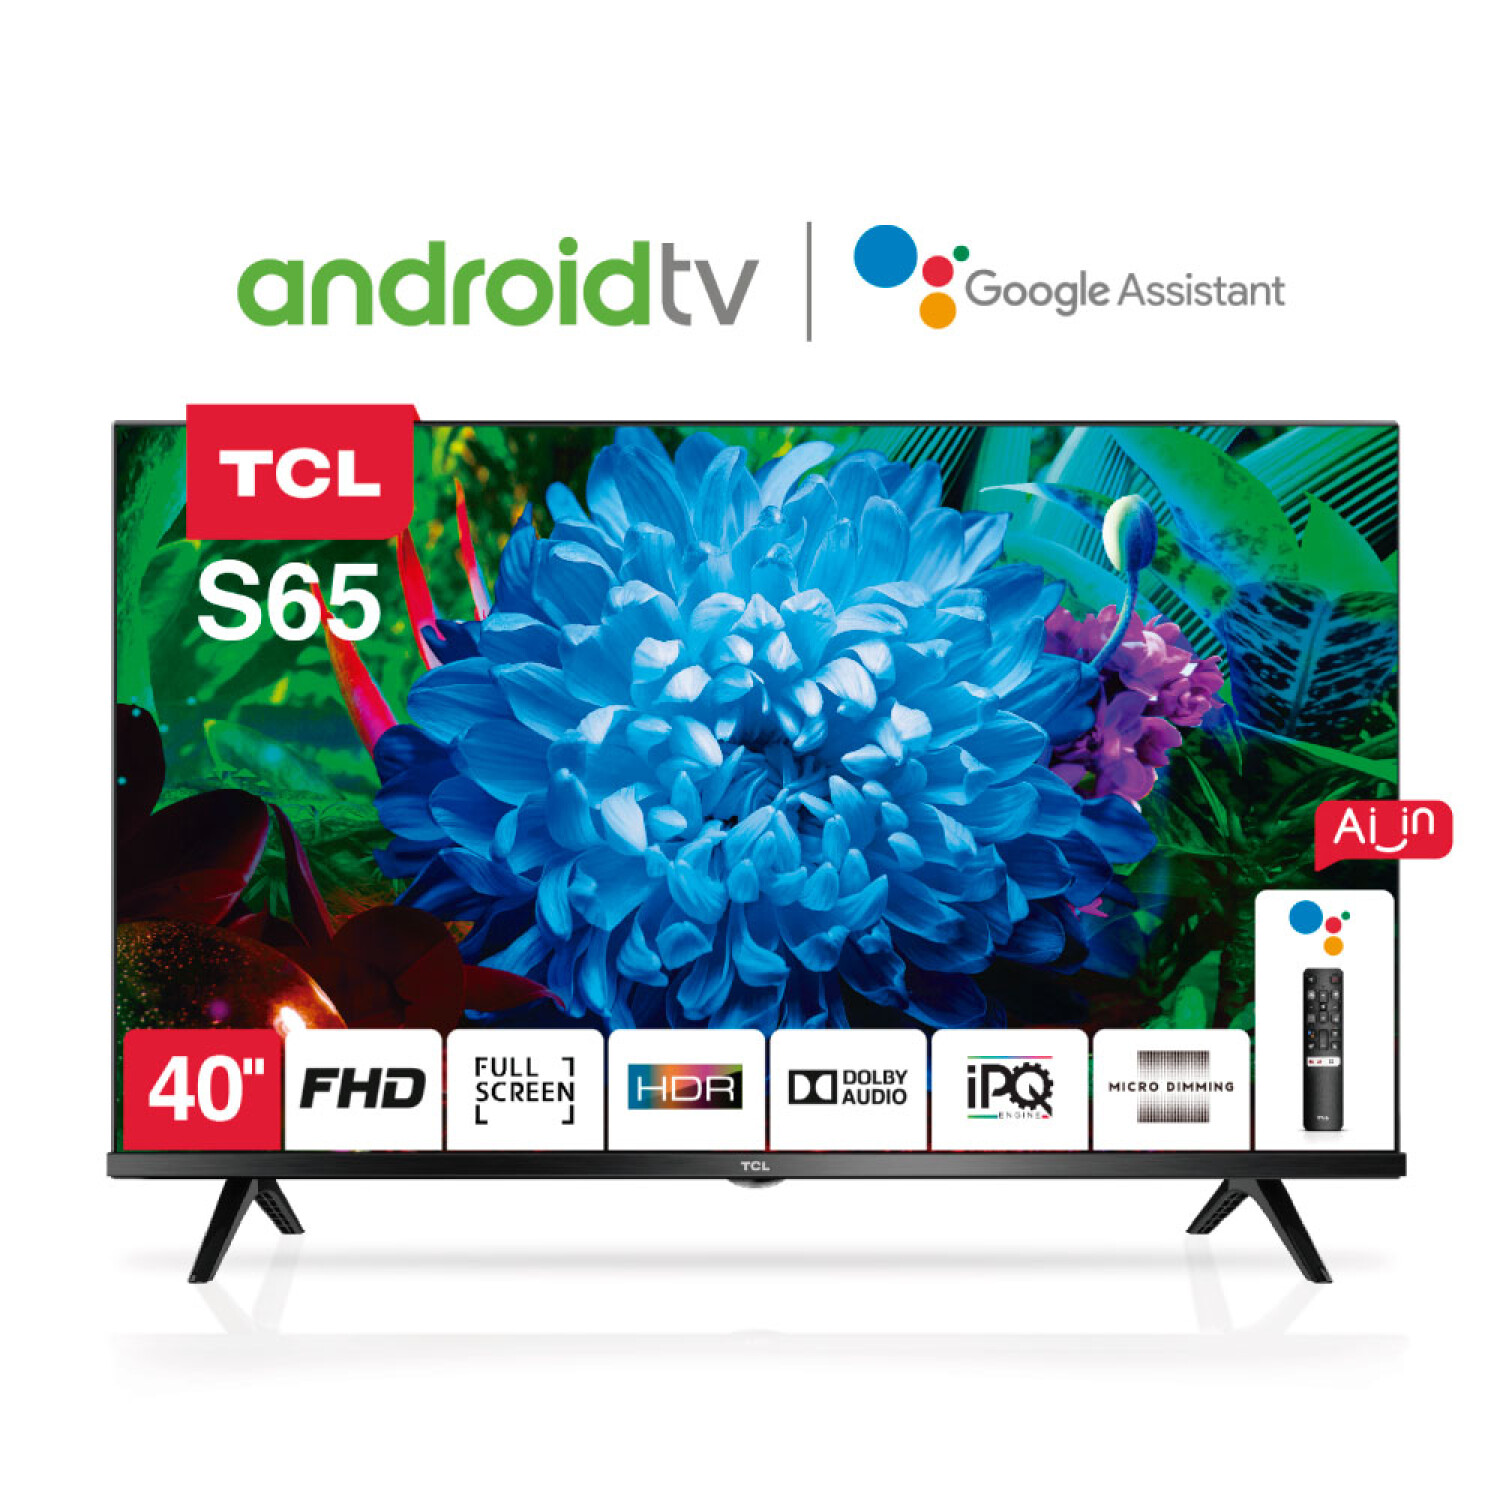 Pantalla Smart TV TCL de 40'' con Google Chromecast